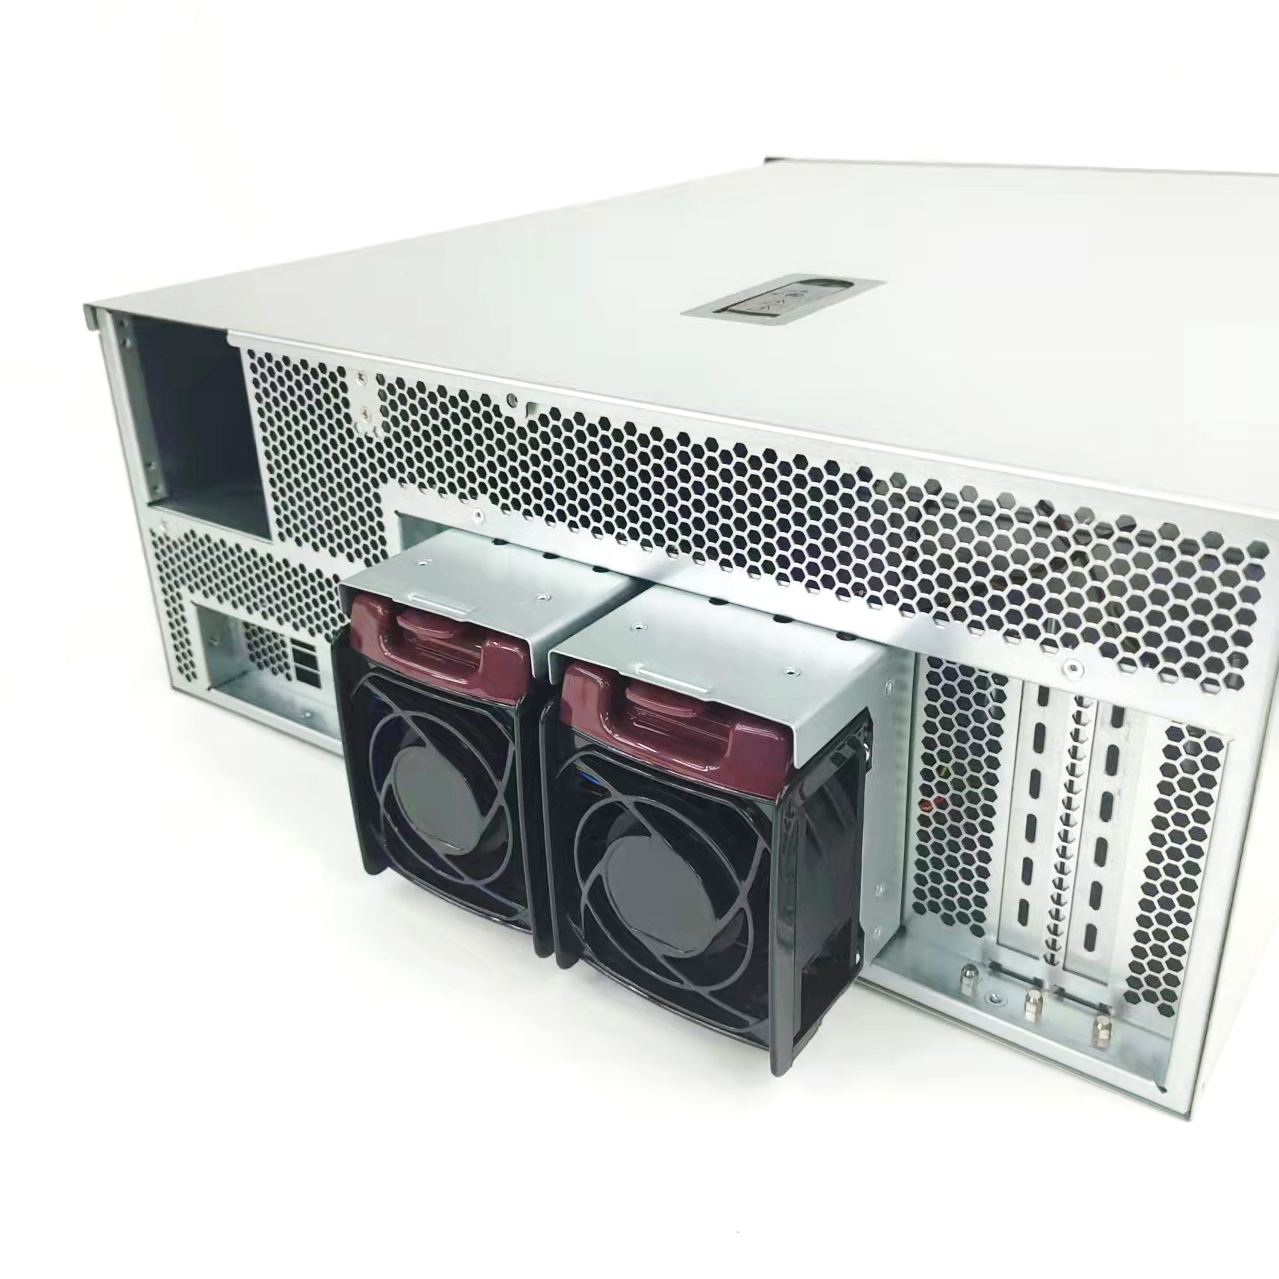  Rackmount chassis Server case 19 inch ATX Micro atx mini-itx 4U 8bay hotswap 6Gbs N408RM 